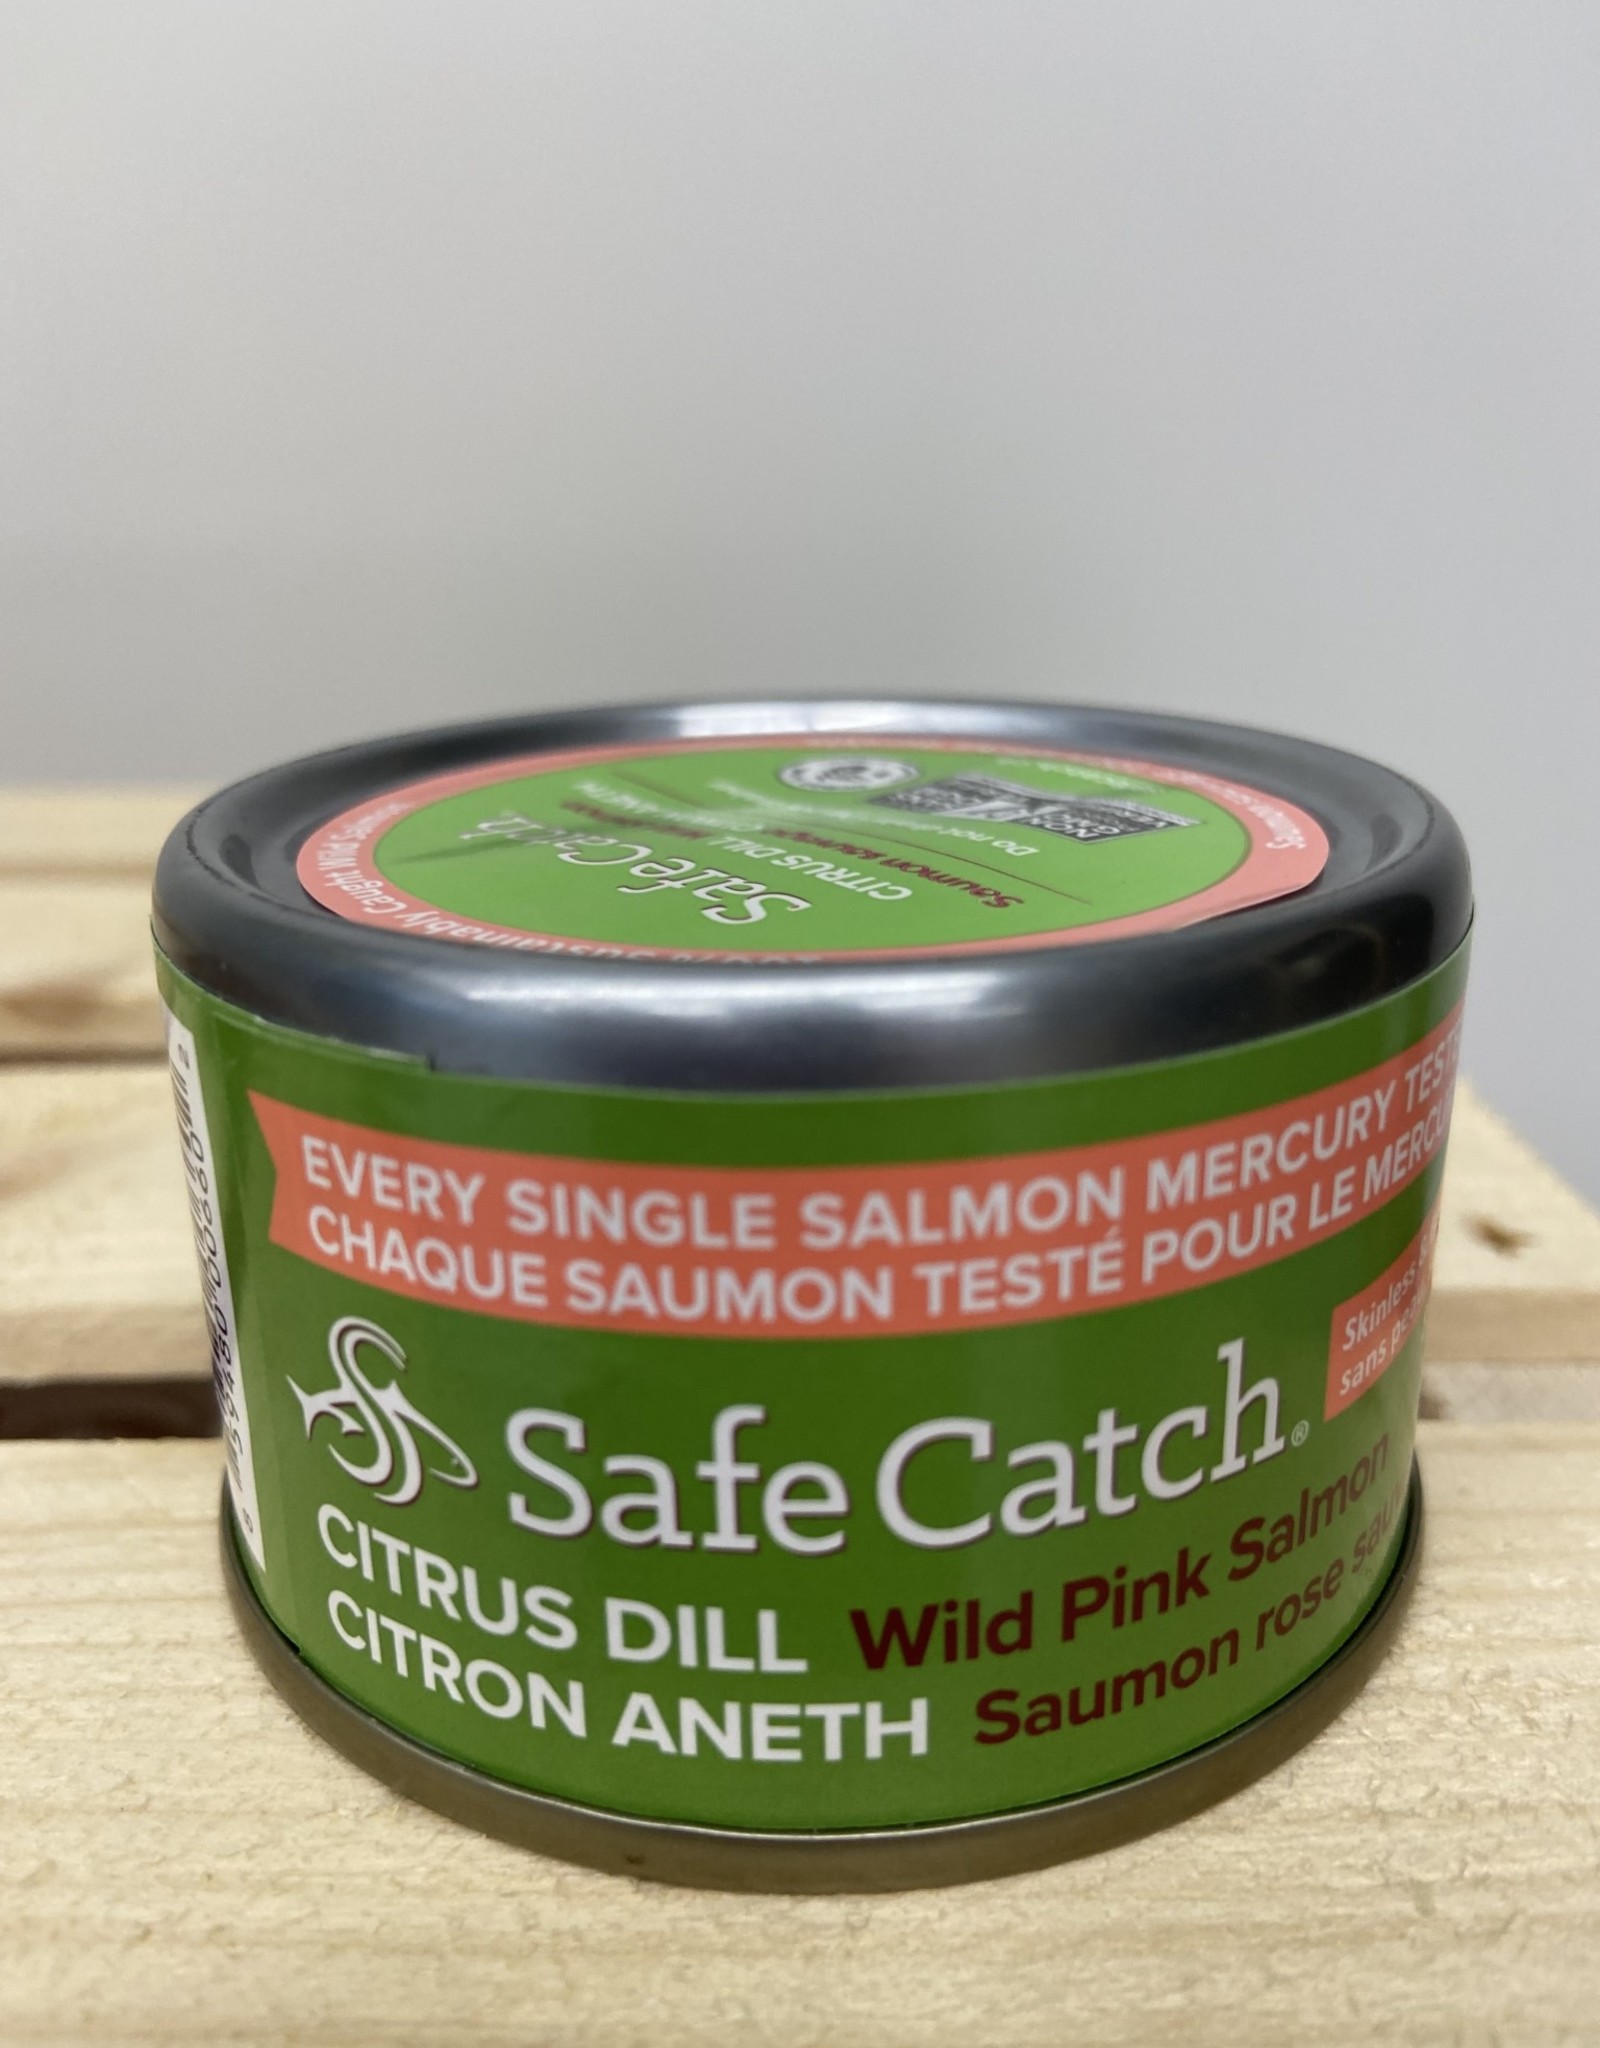 Safe Catch Safe Catch - Wild Pink Salmon, Citrus Dill, 85g